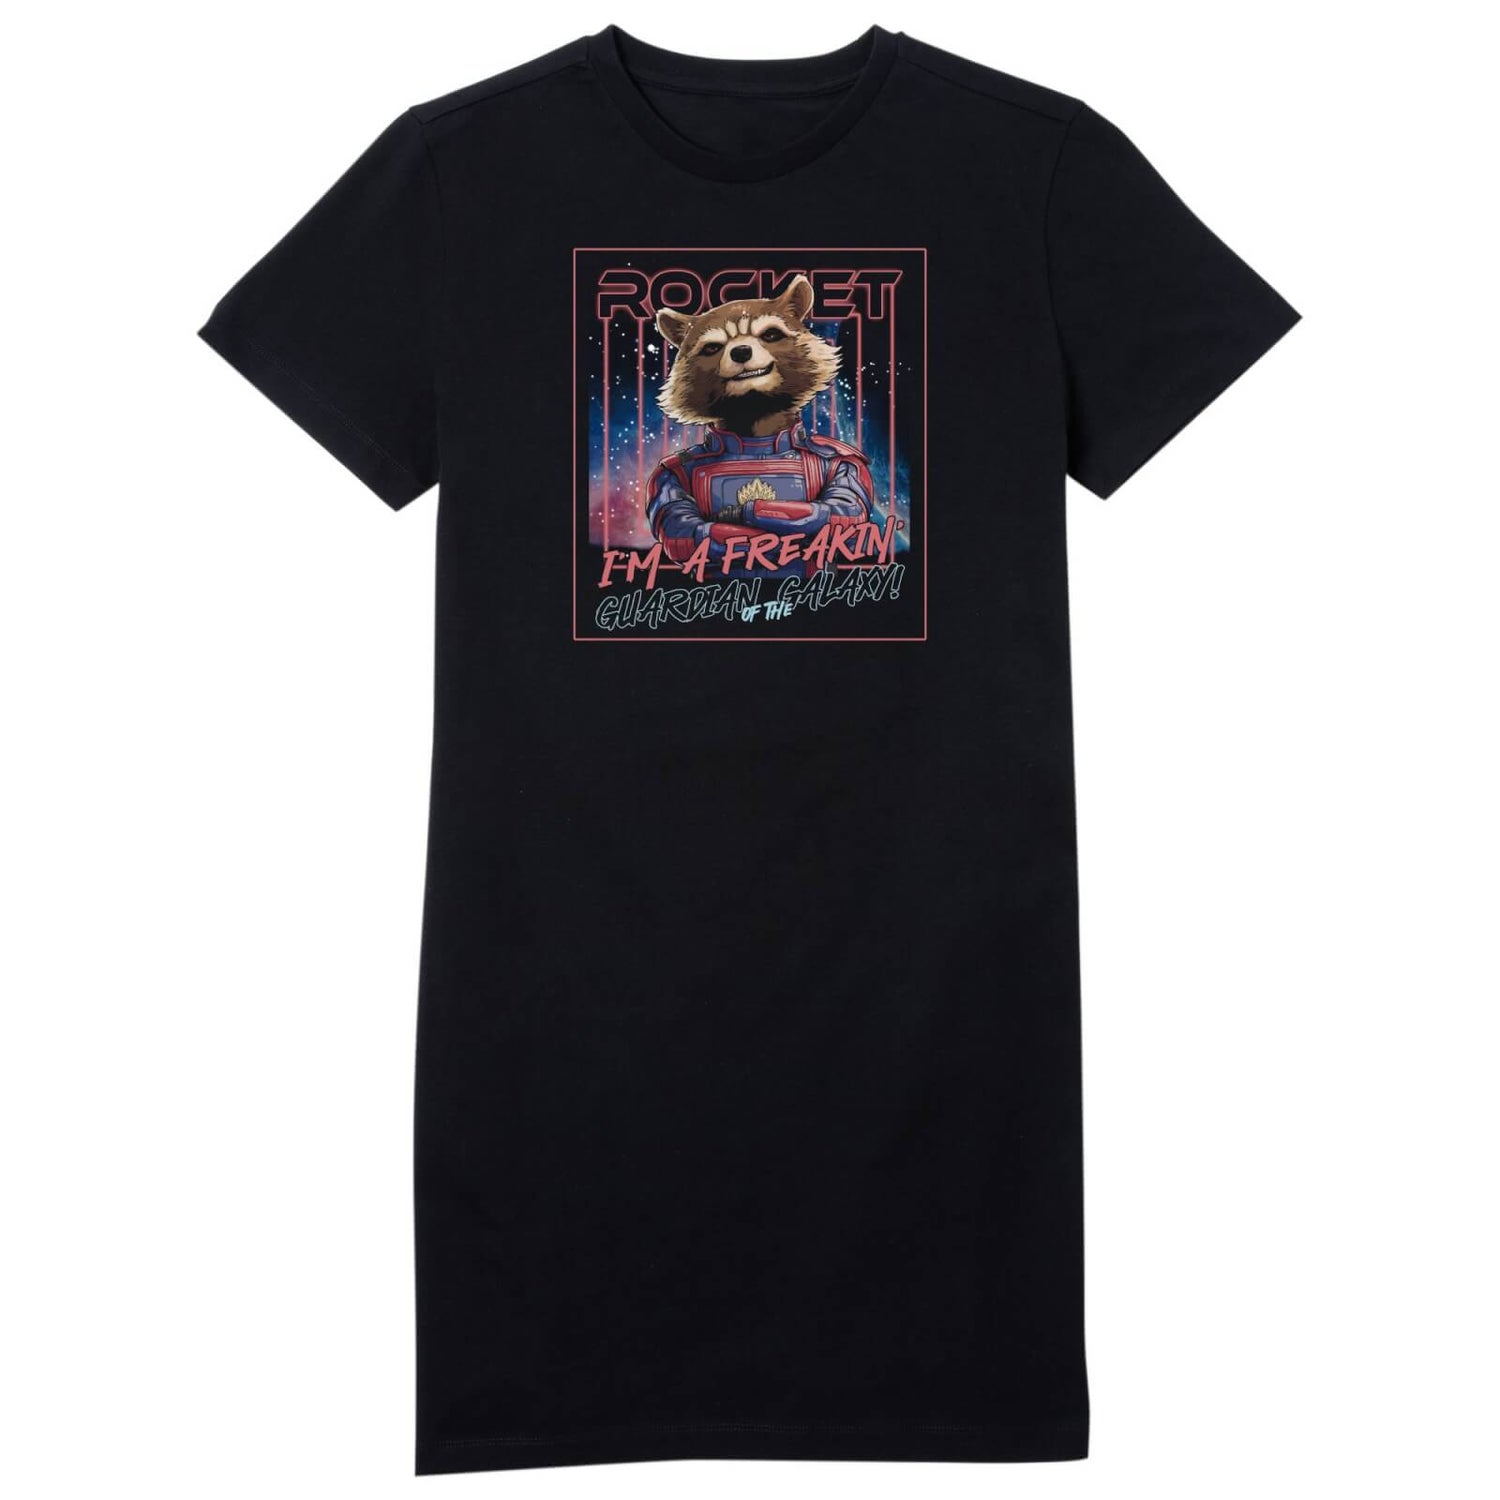 Guardians of the Galaxy Glowing Rocket Raccoon Women's T-Shirt Dress - Black